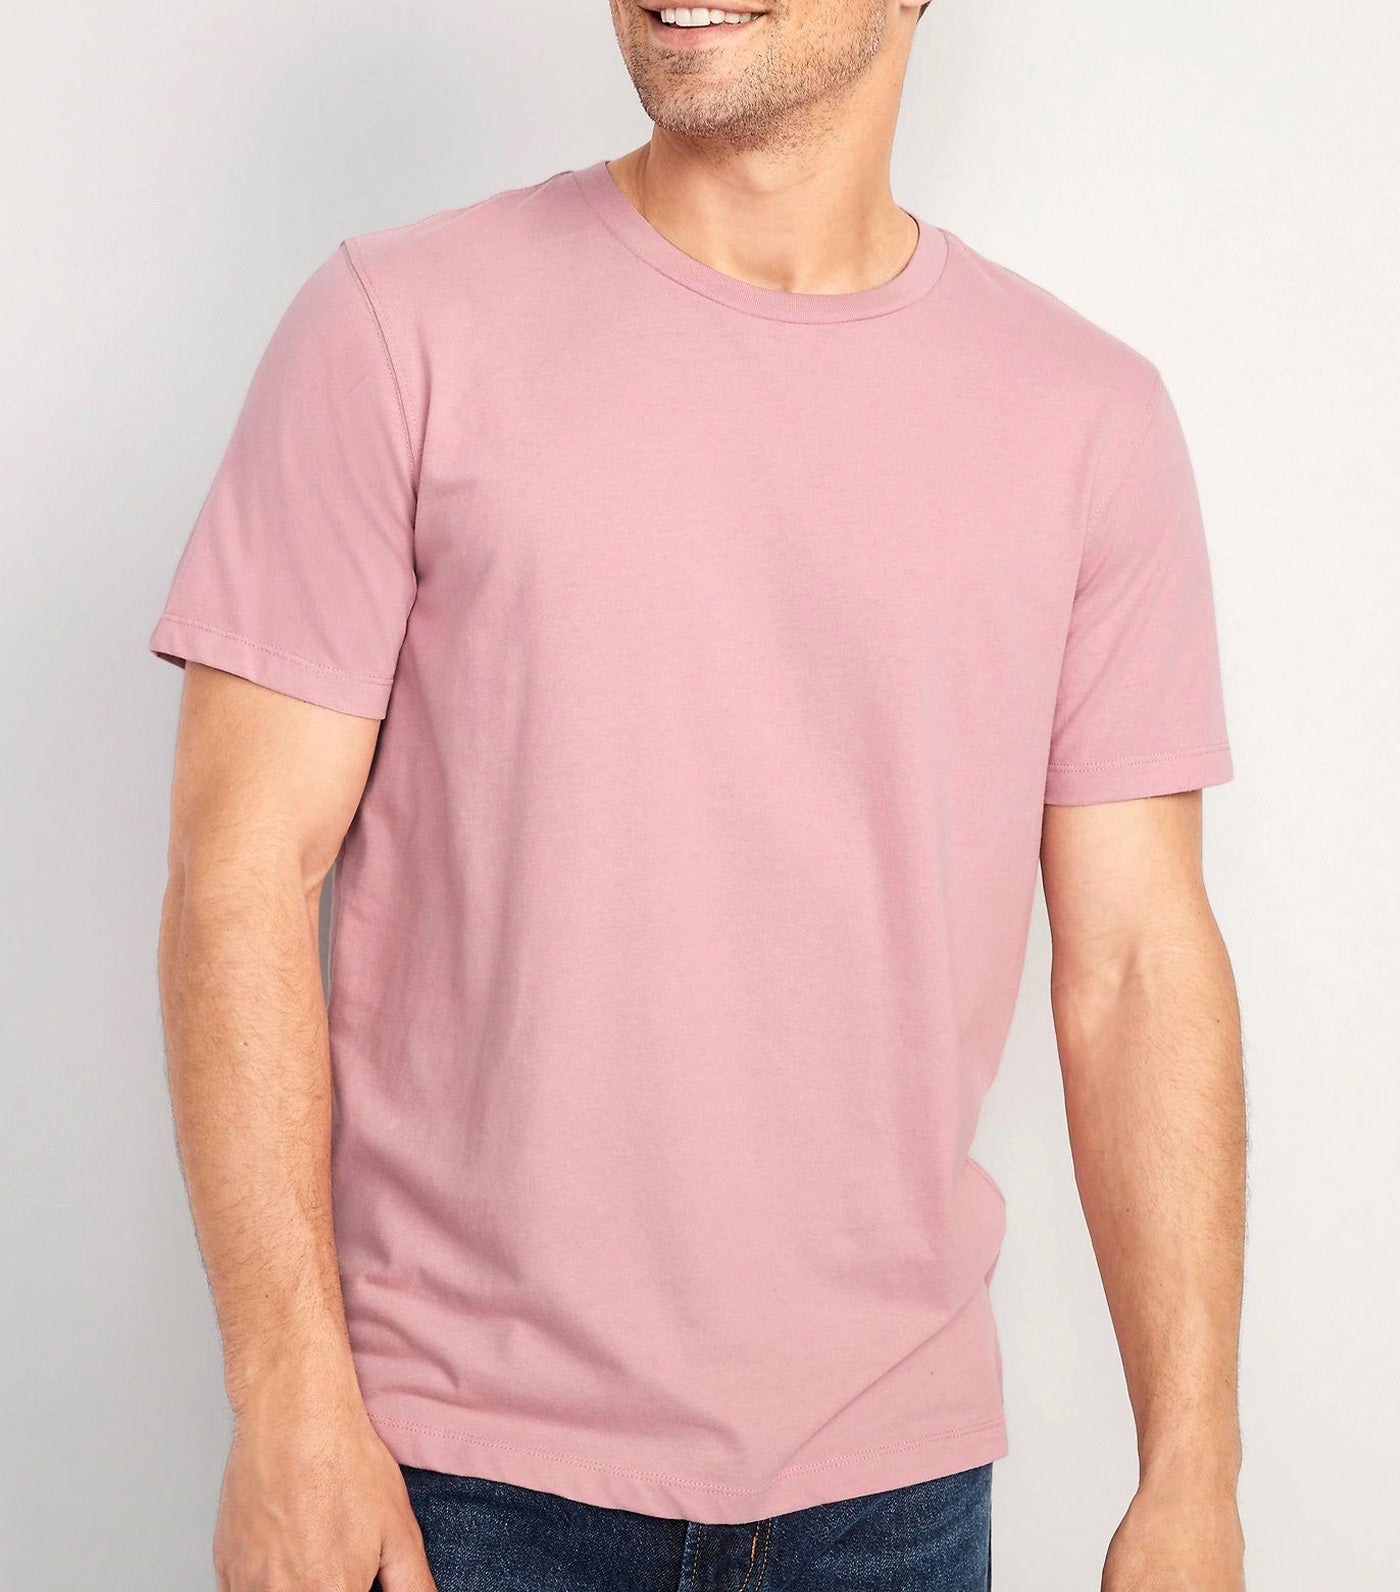 Soft-Washed Crew-Neck T-Shirt for Men Mauve Comfort